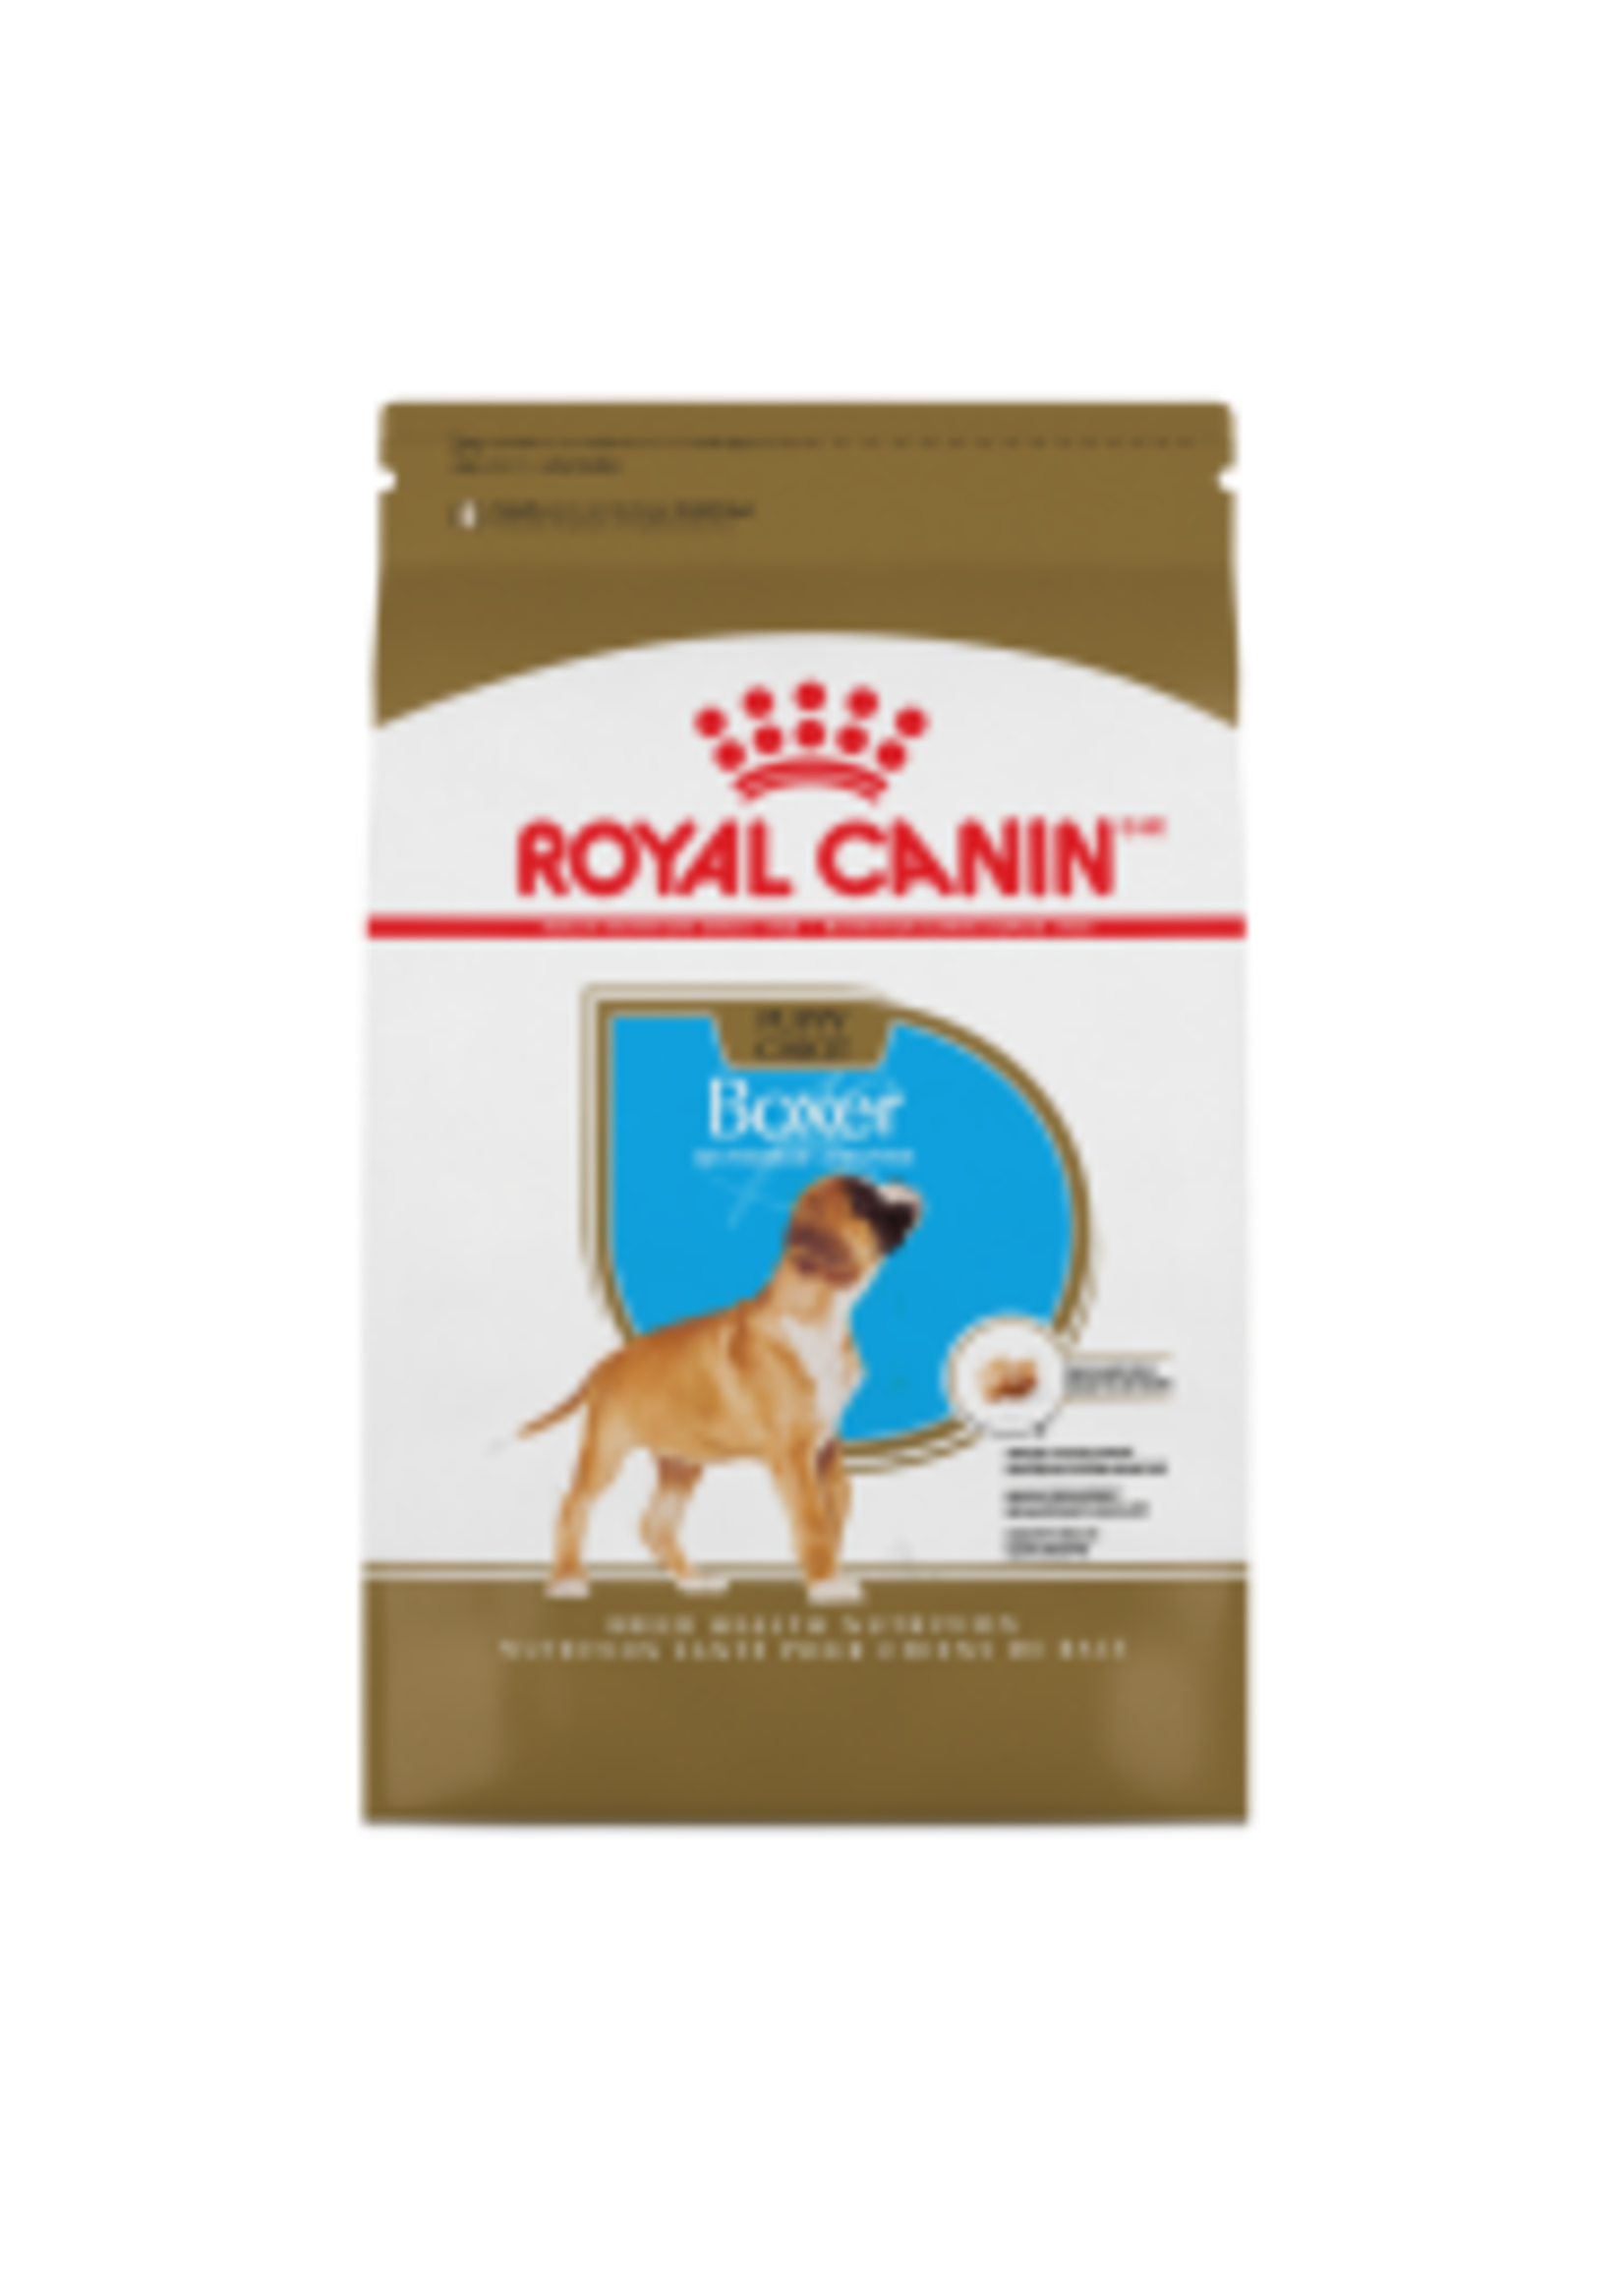 Royal Canin Royal Canin - Boxer Puppy 30lb